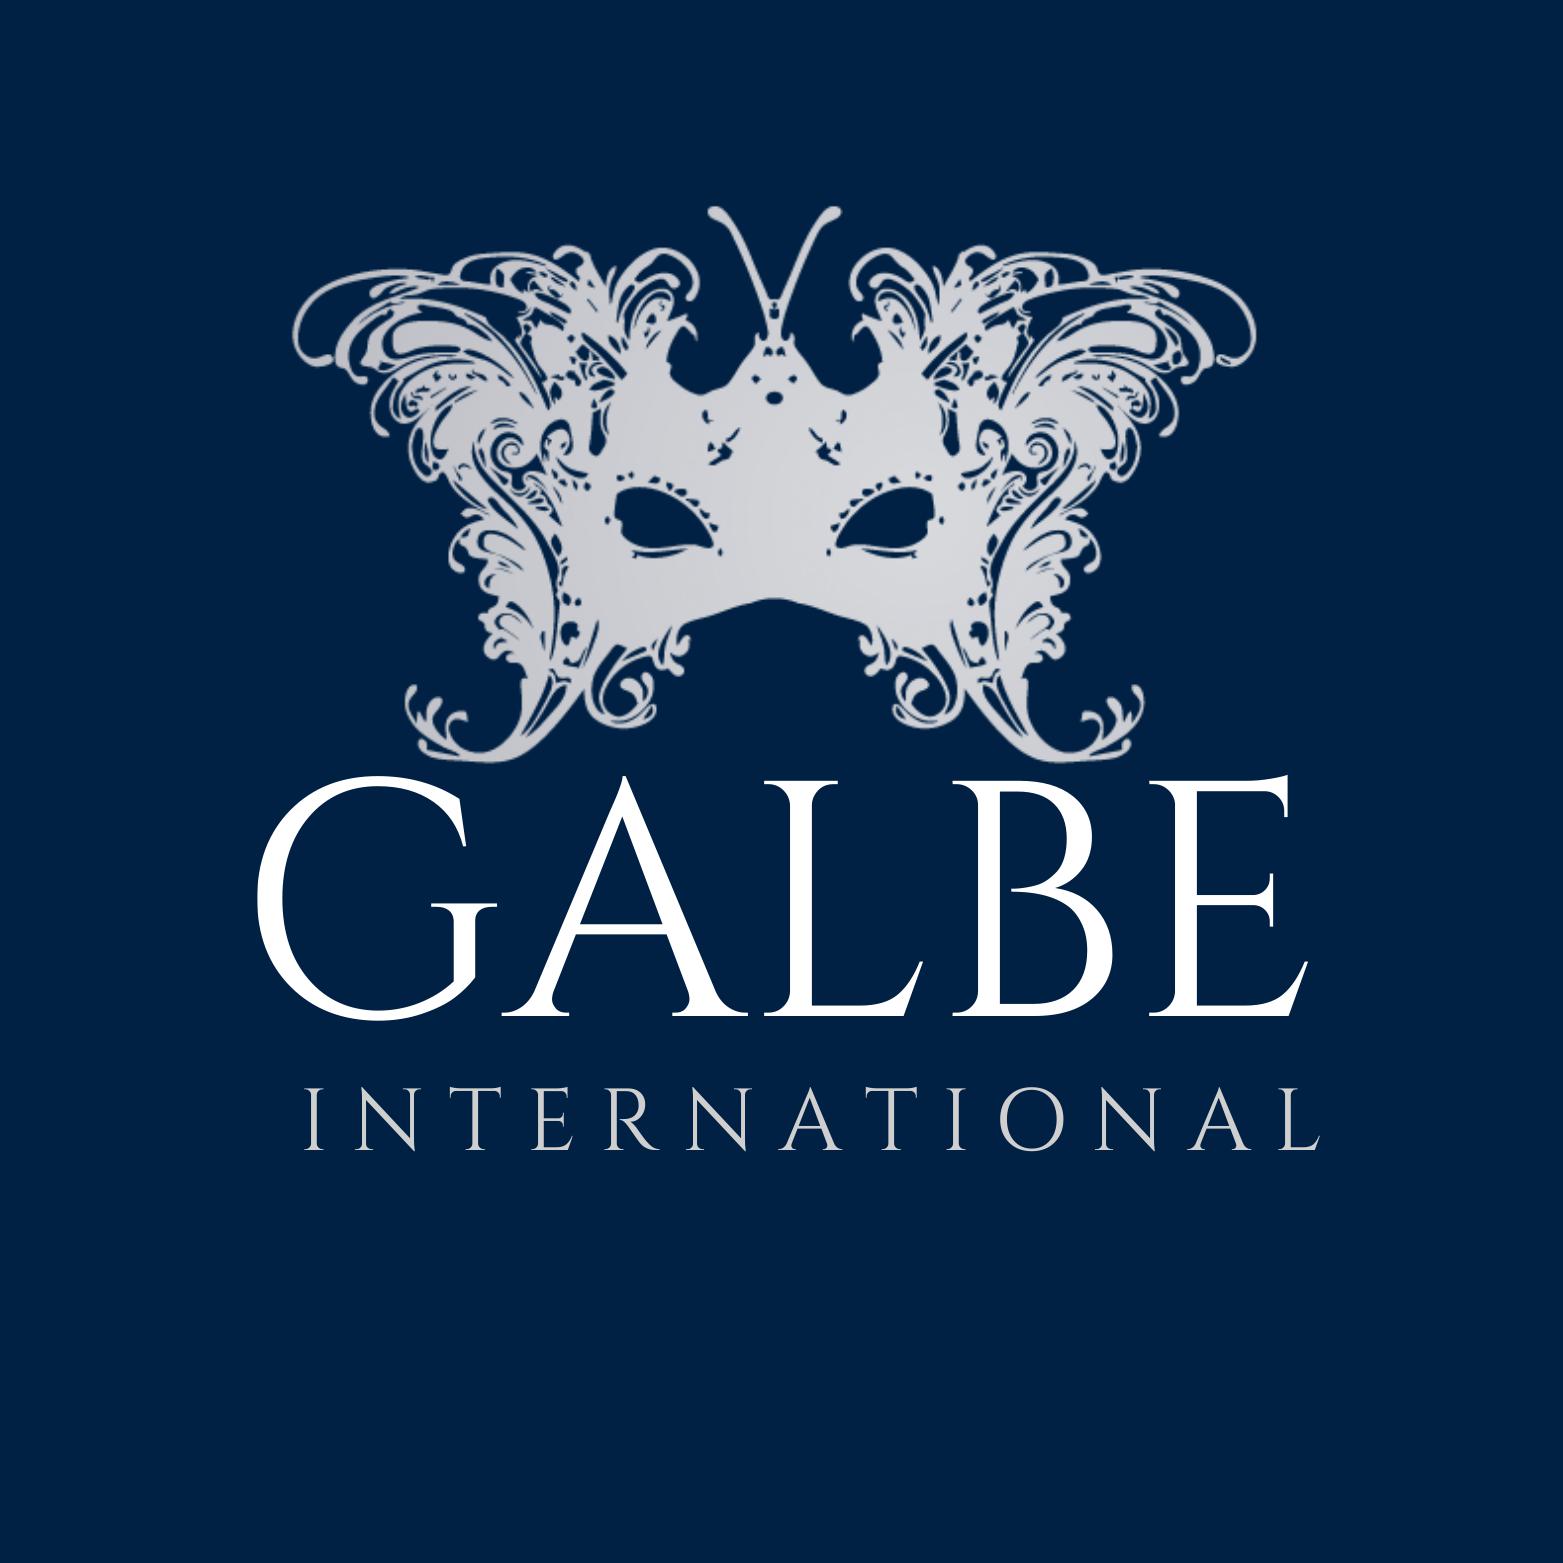 Galbe International